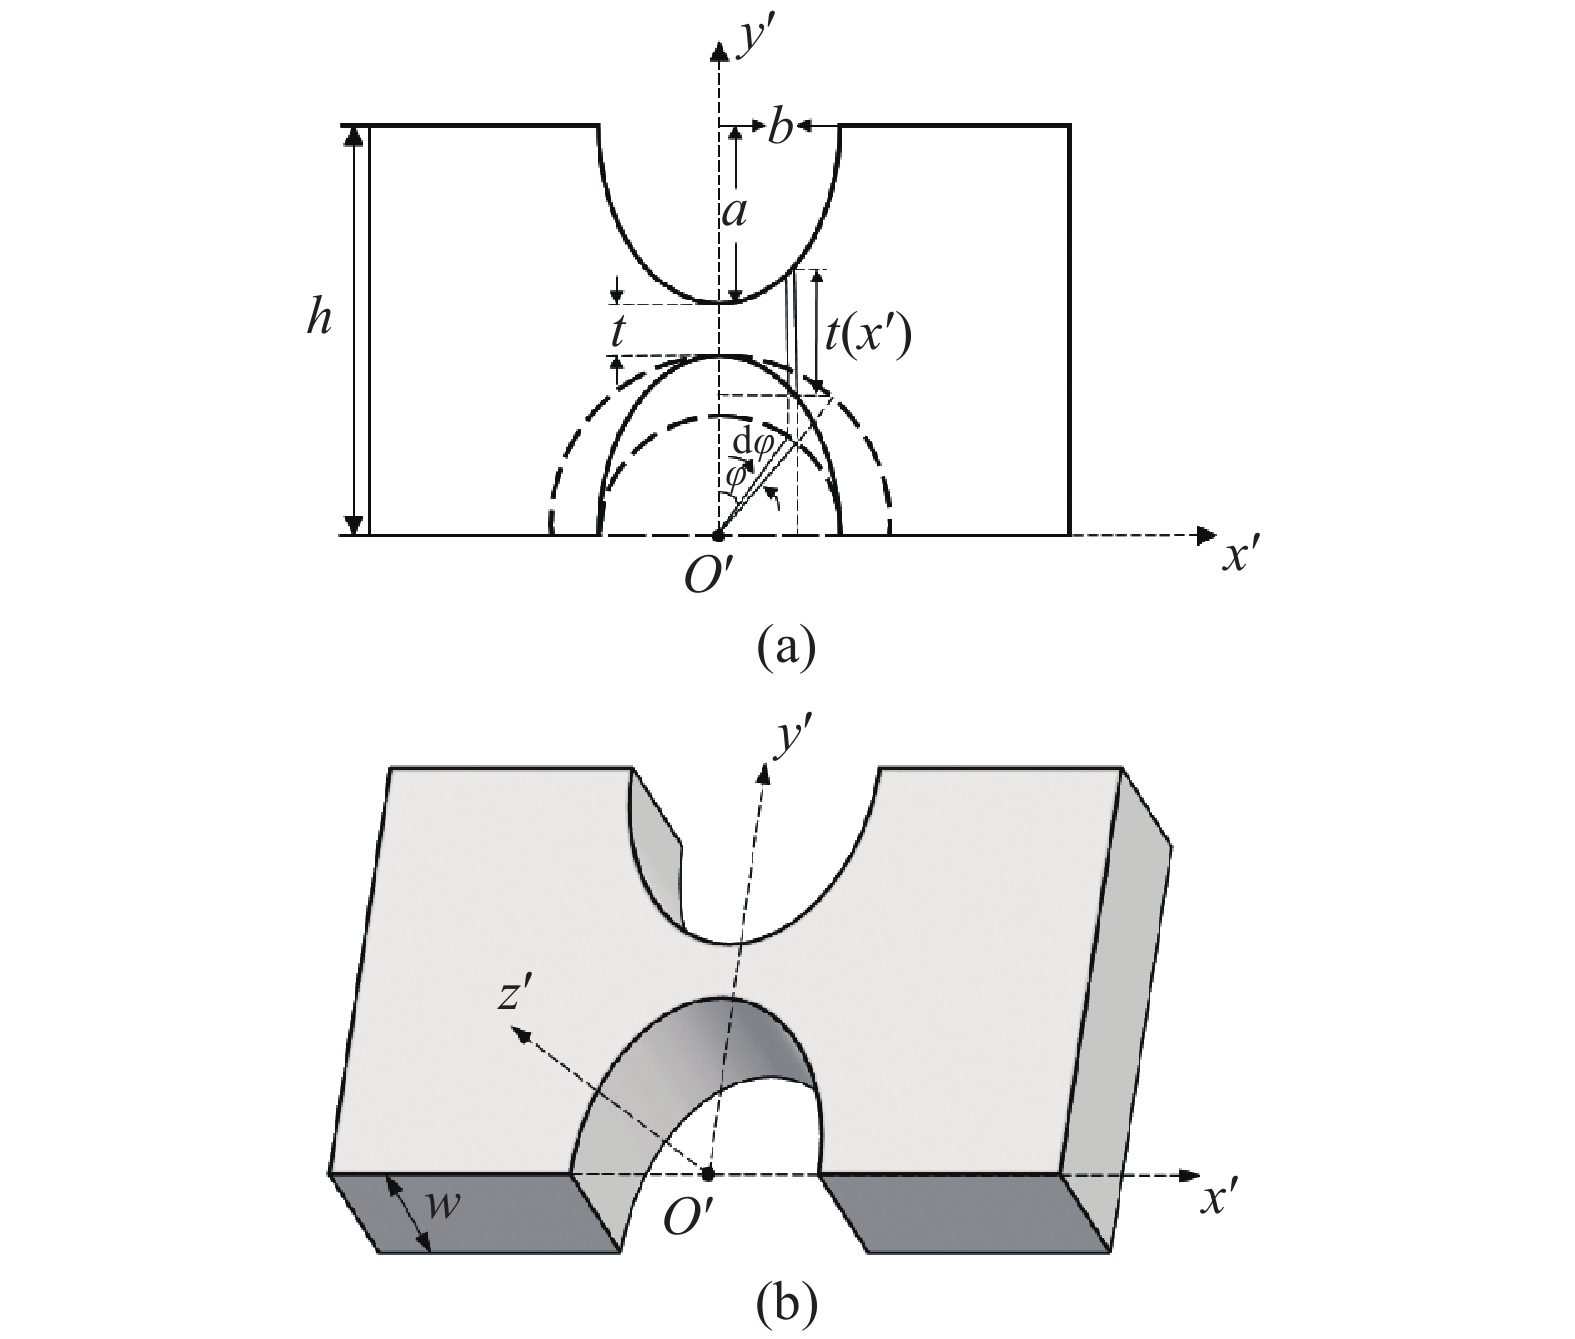 (a) Plan view of deep-cut flexure hinge; (b) Schematic diagram of deep-cut flexure hinge